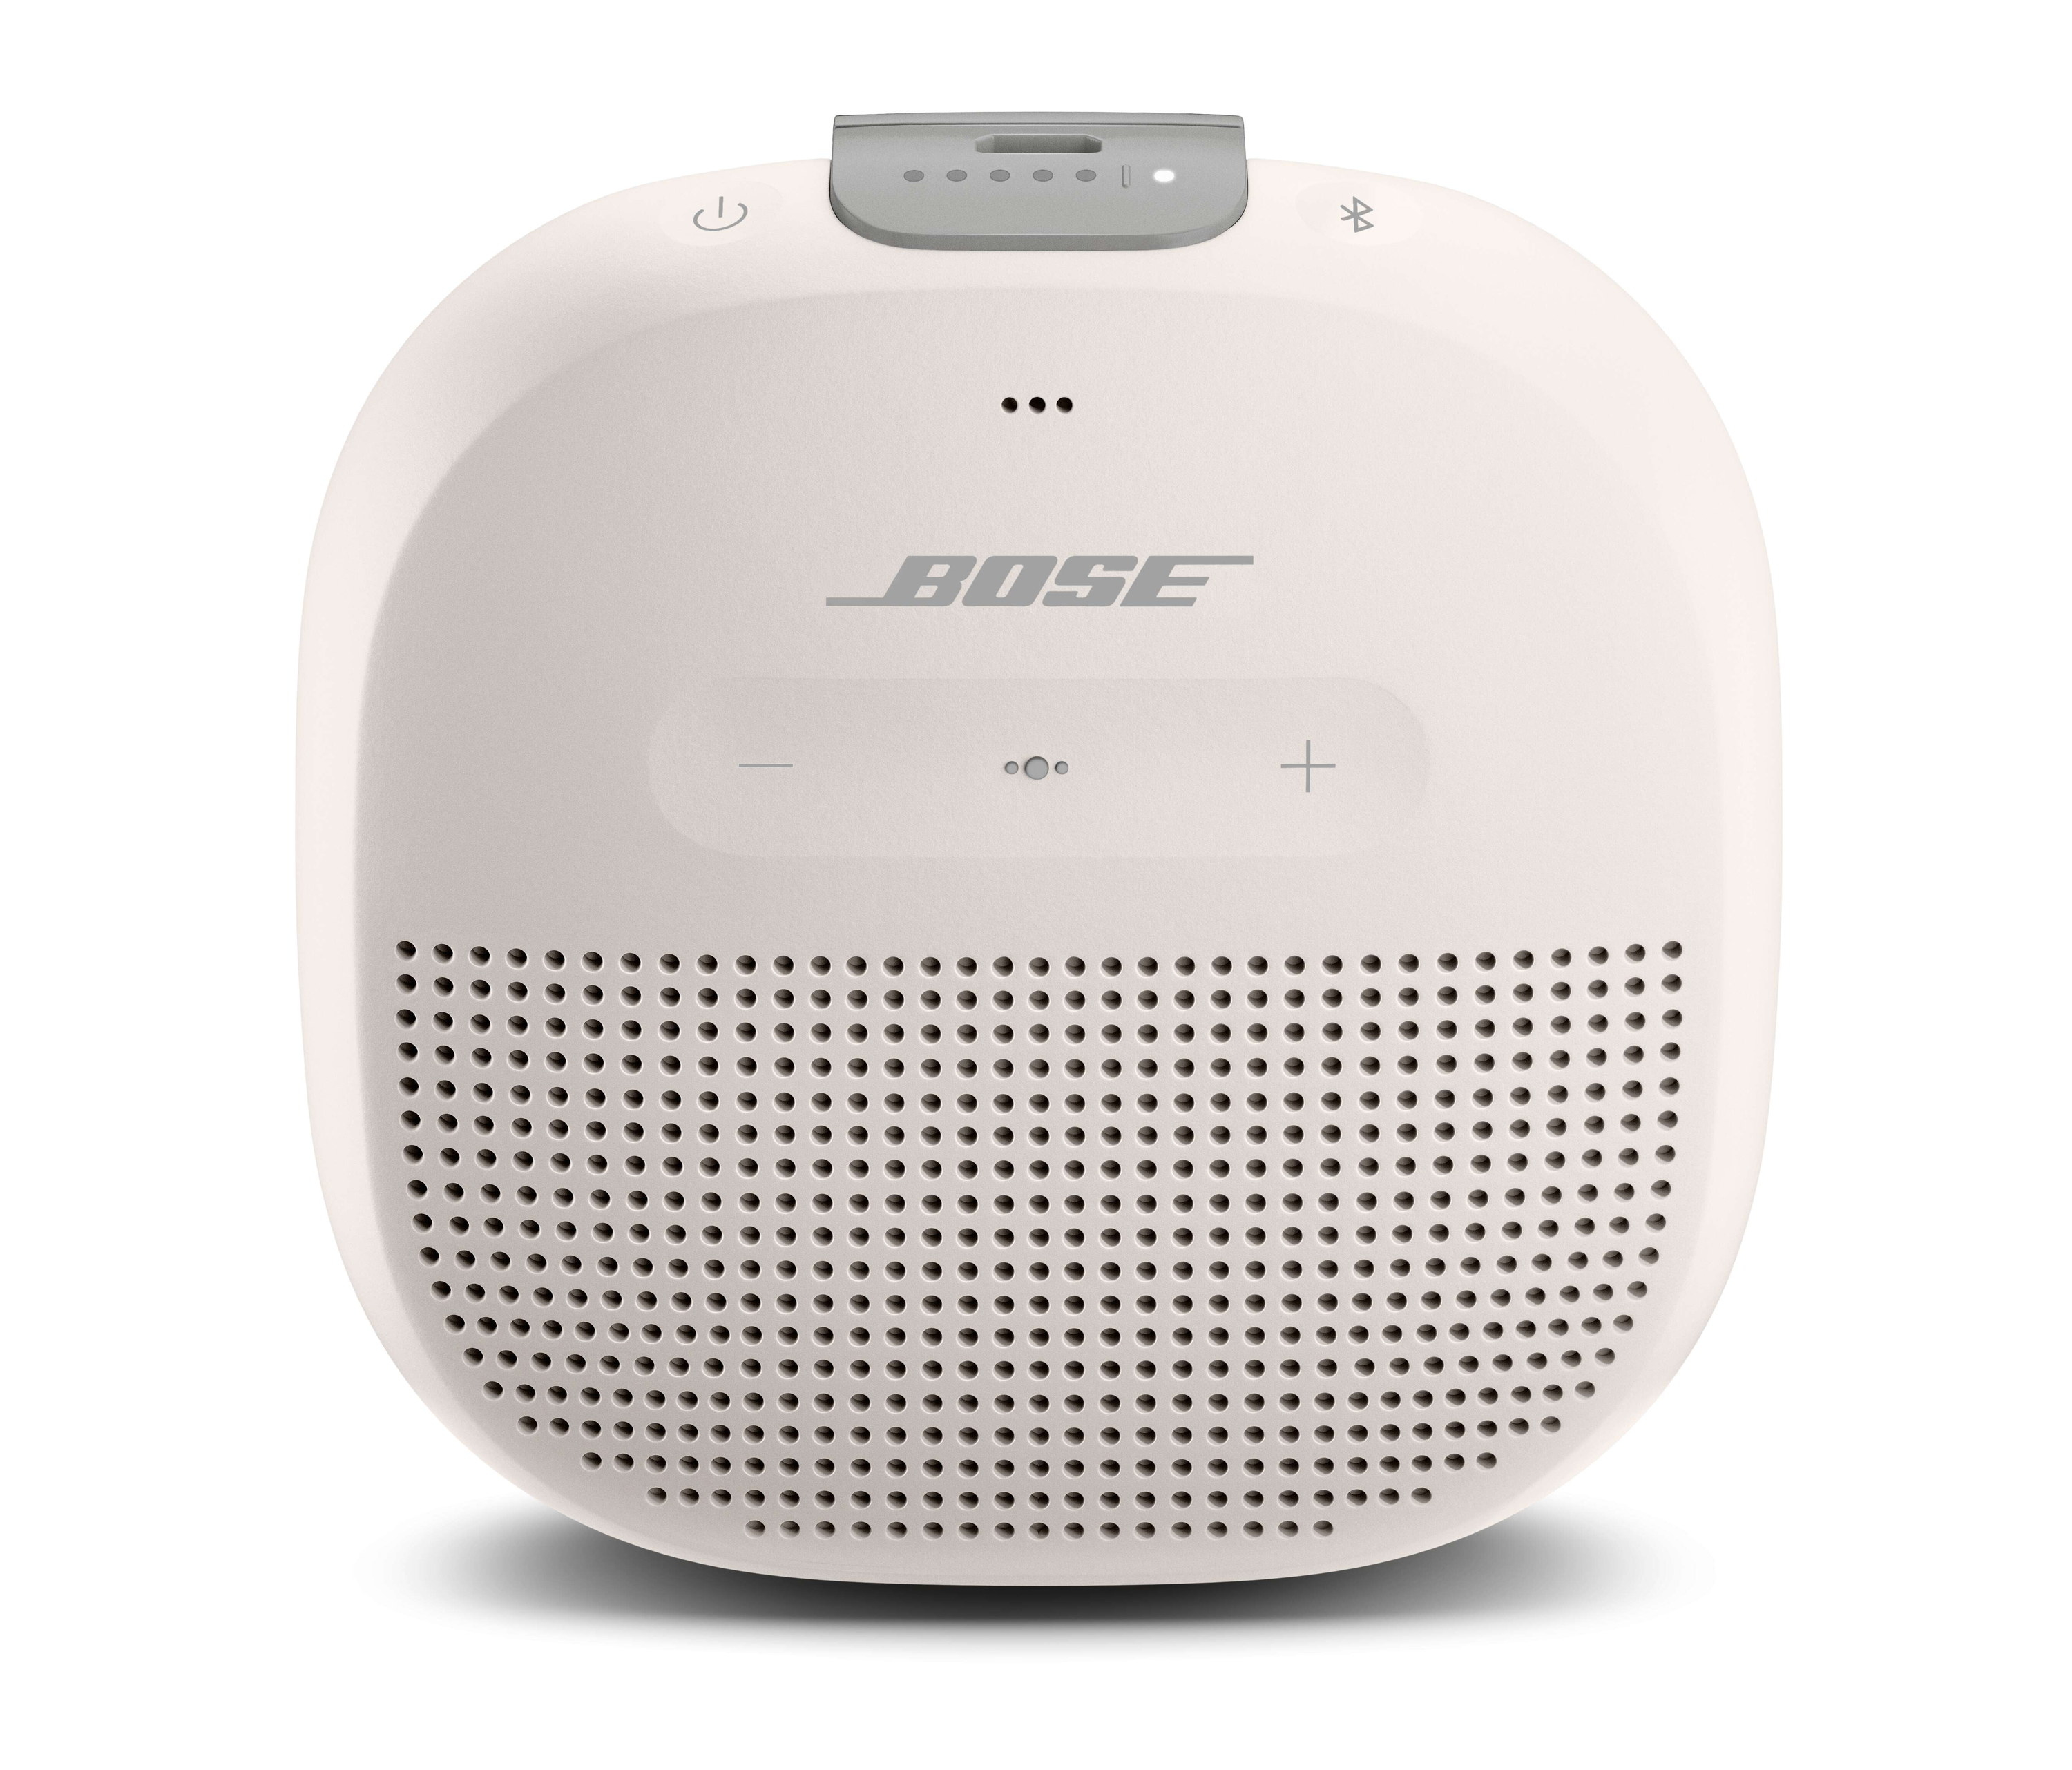 Bose micro wireless bluetooth speaker